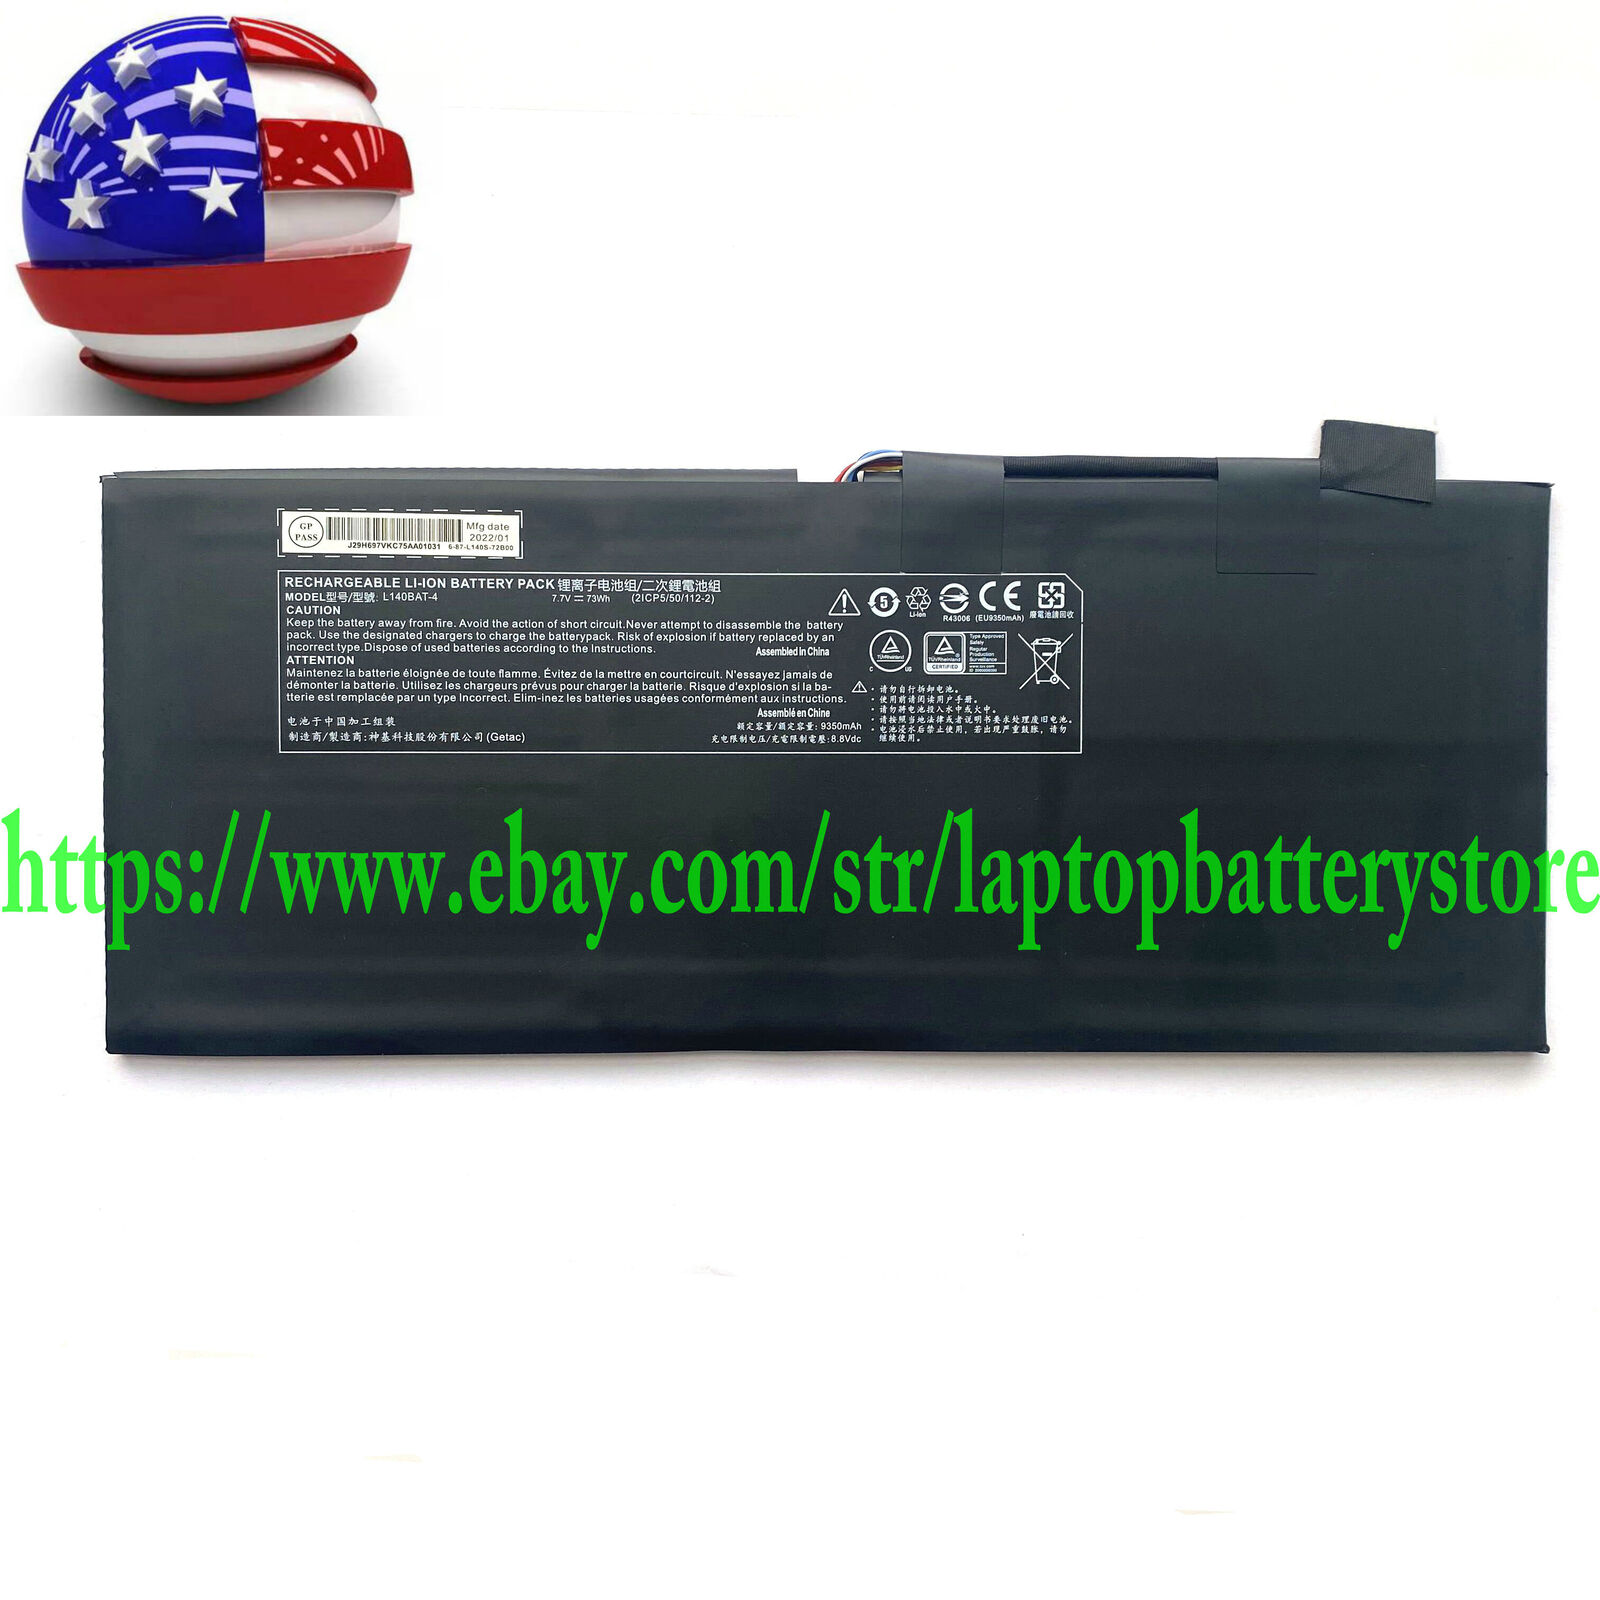 Genuine L140BAT-4 6-87-L140S-72B01 battery for Lemp9 System76 Darter Pro 2021